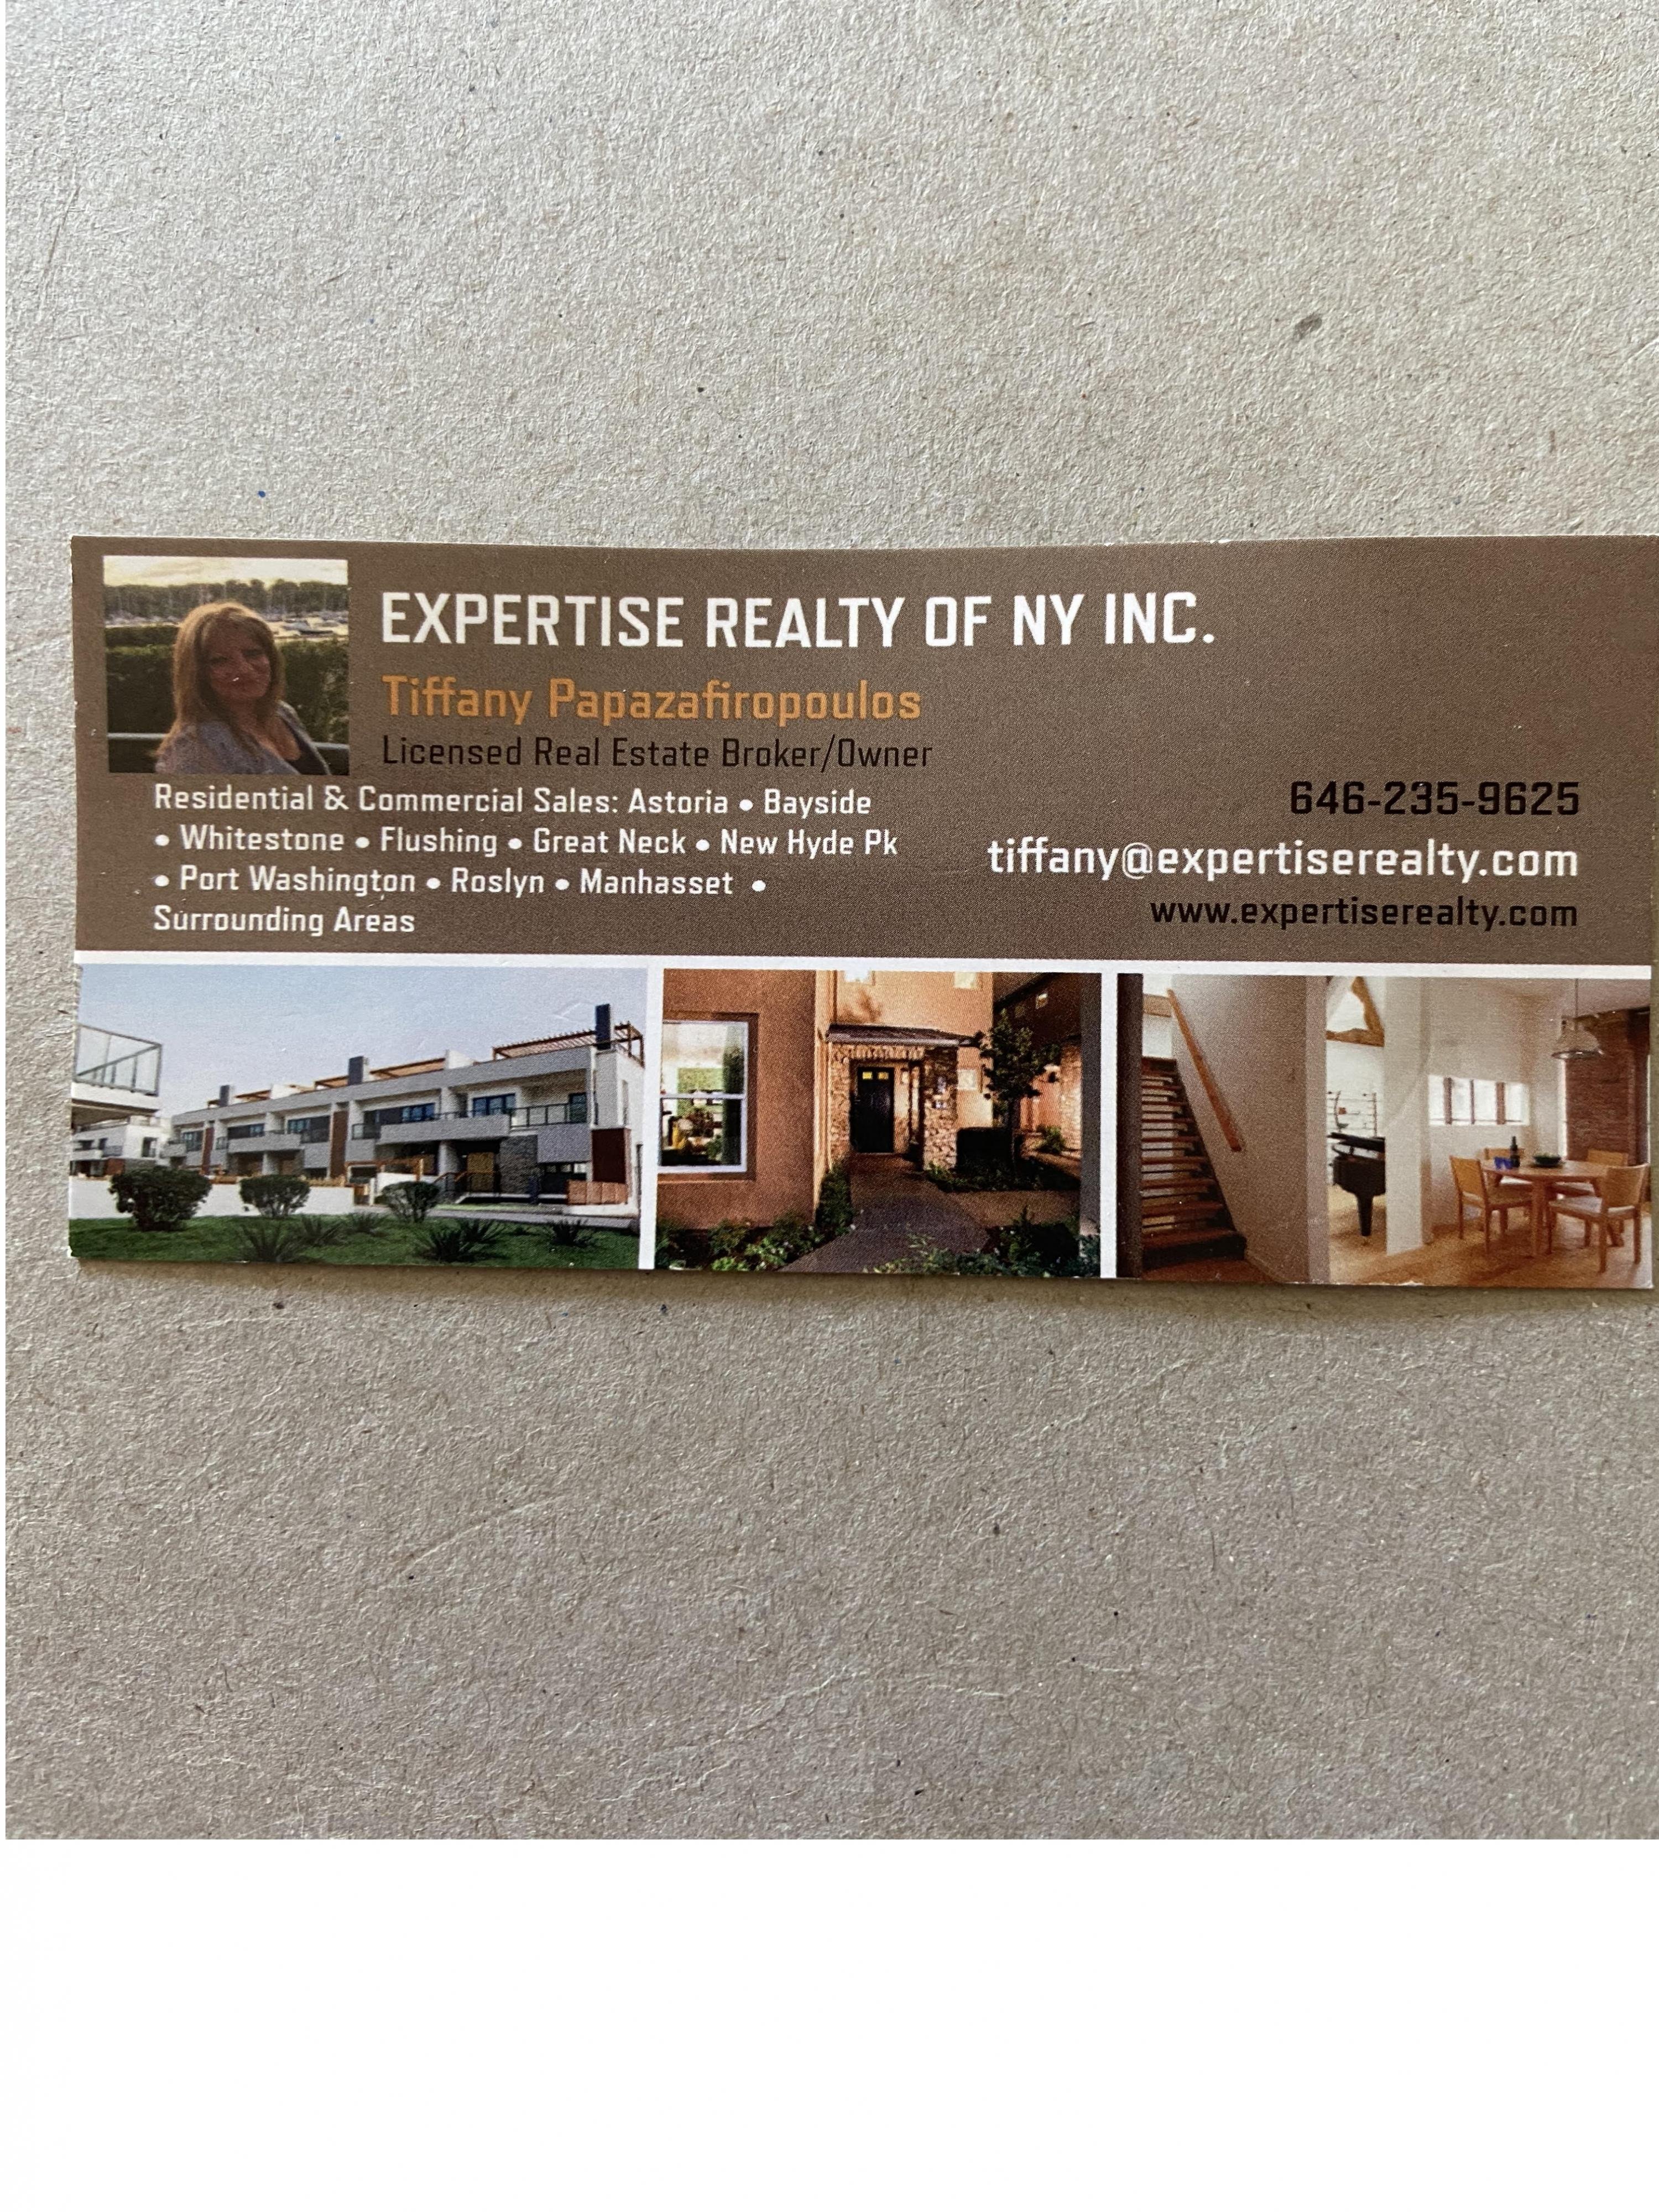 Expertise Realty of NY INC. Tiffany Papazafiropoulos cover photo